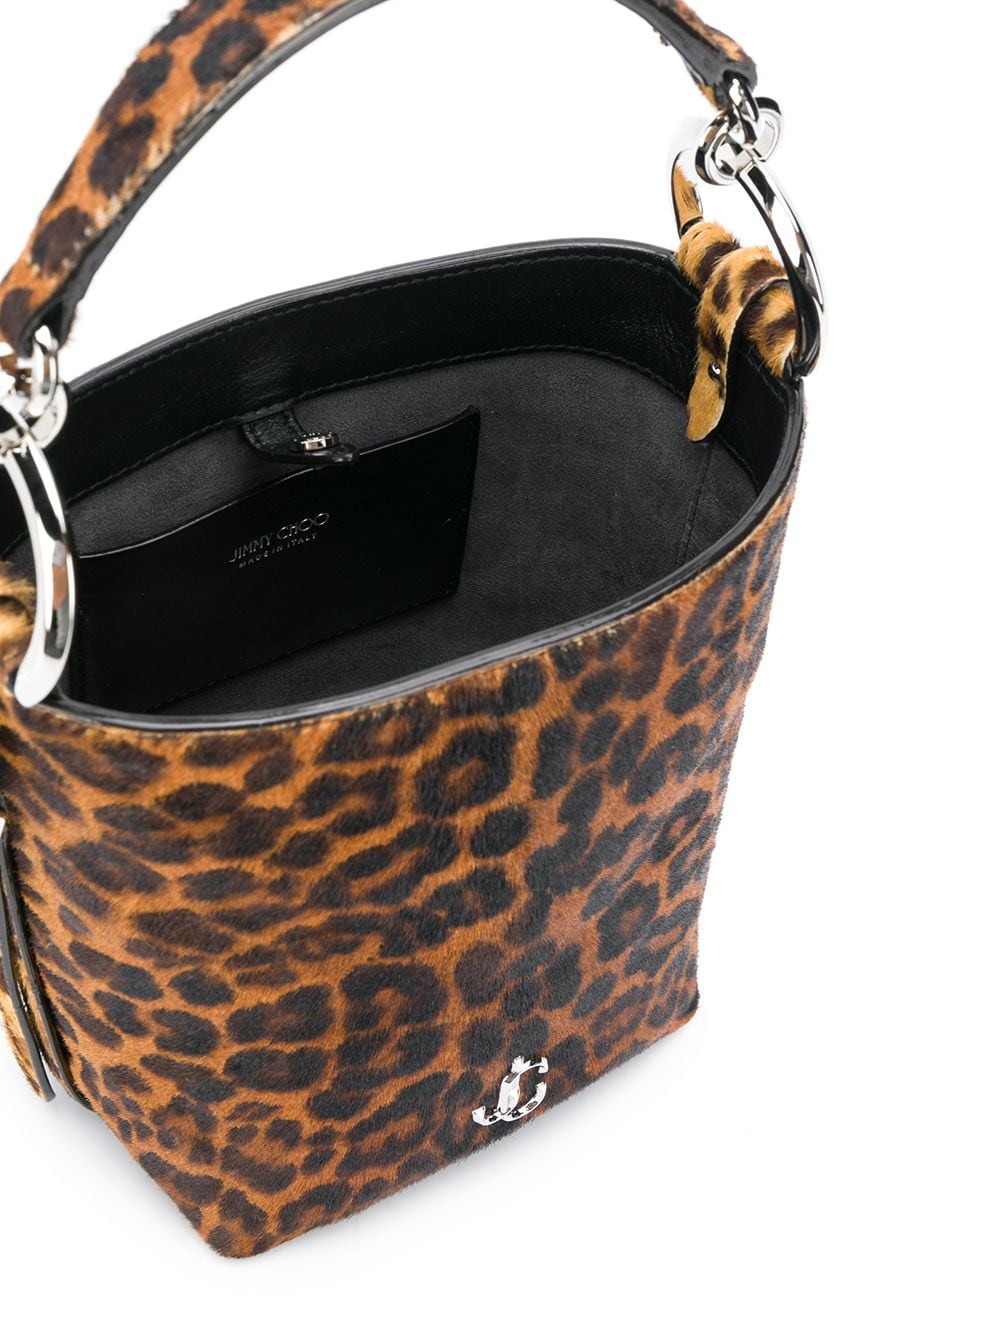 фото Jimmy choo сумка-ведро varenne с леопардовым принтом